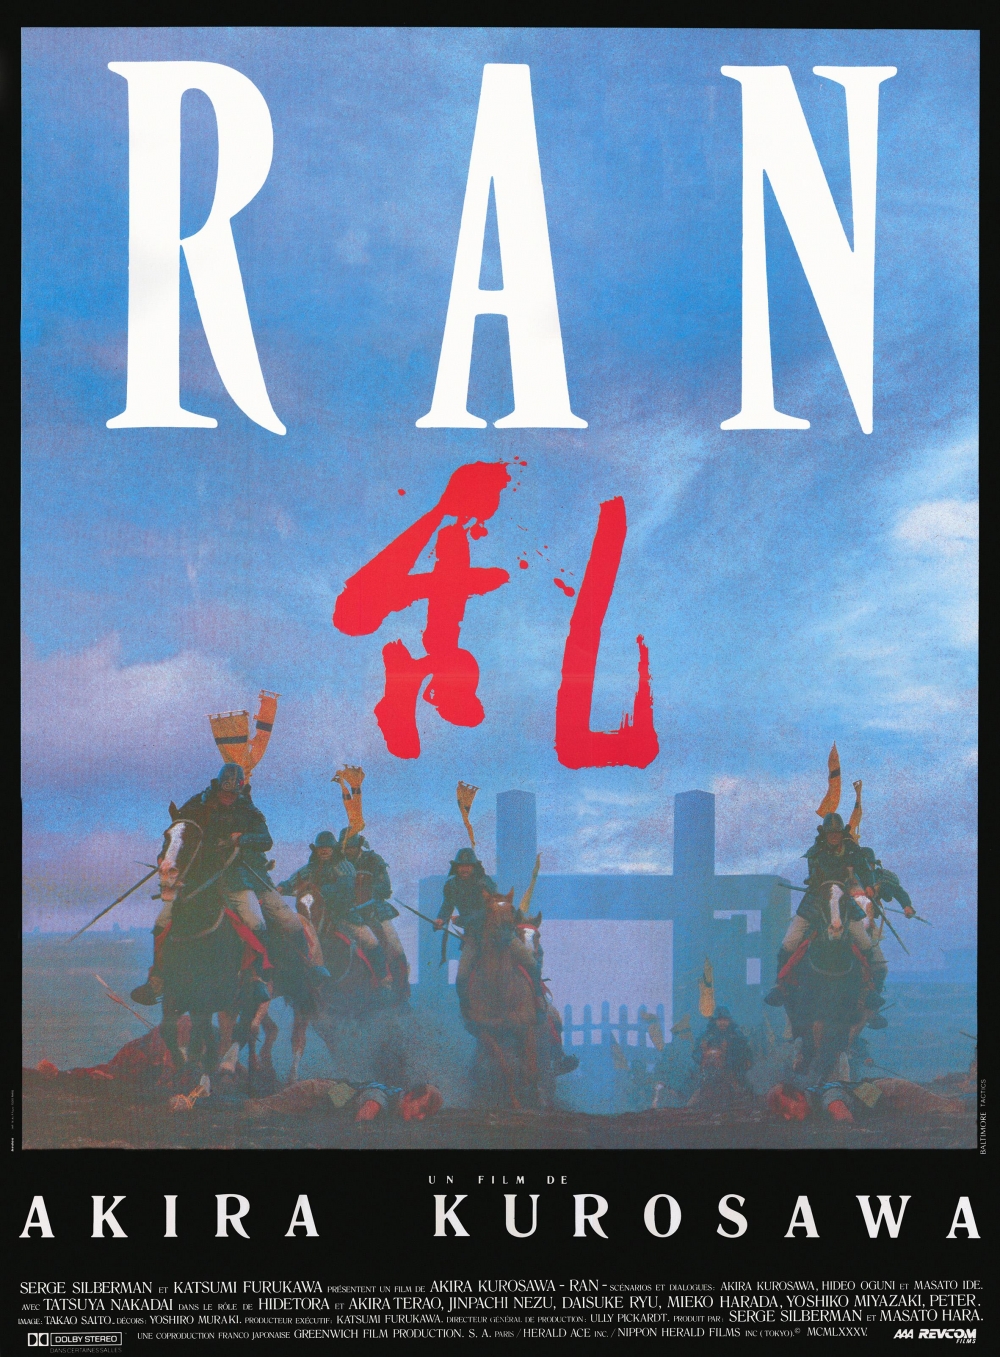 Akira Kurosawa's Ran Poster 2 by ChaosEmperor971 on DeviantArt